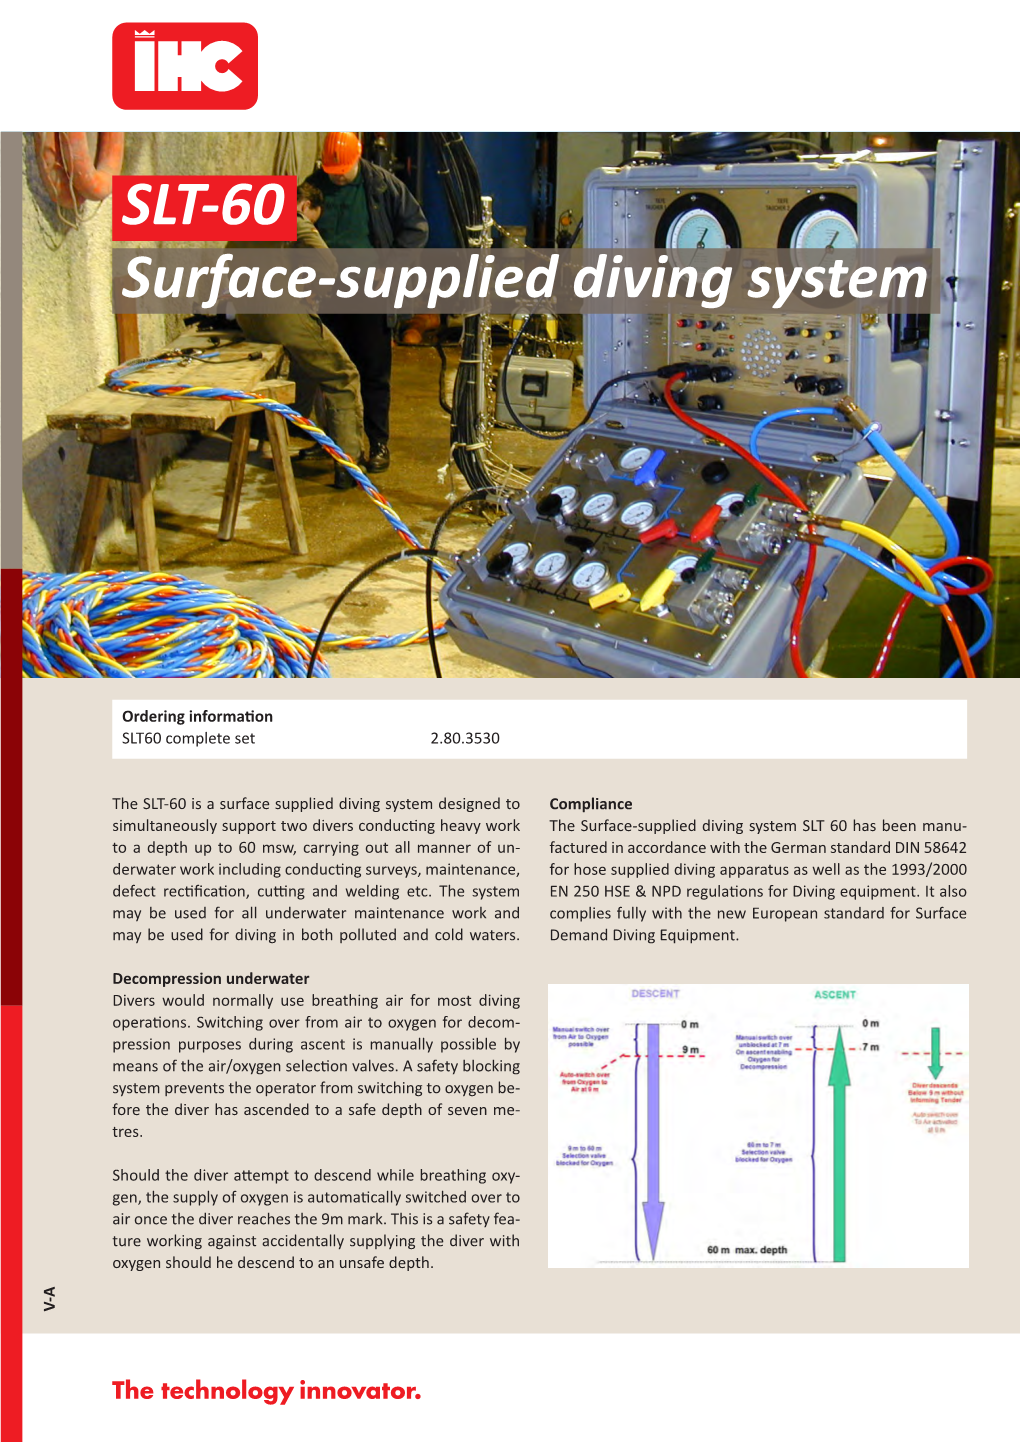 SLT-60 Surface-Supplied Diving System